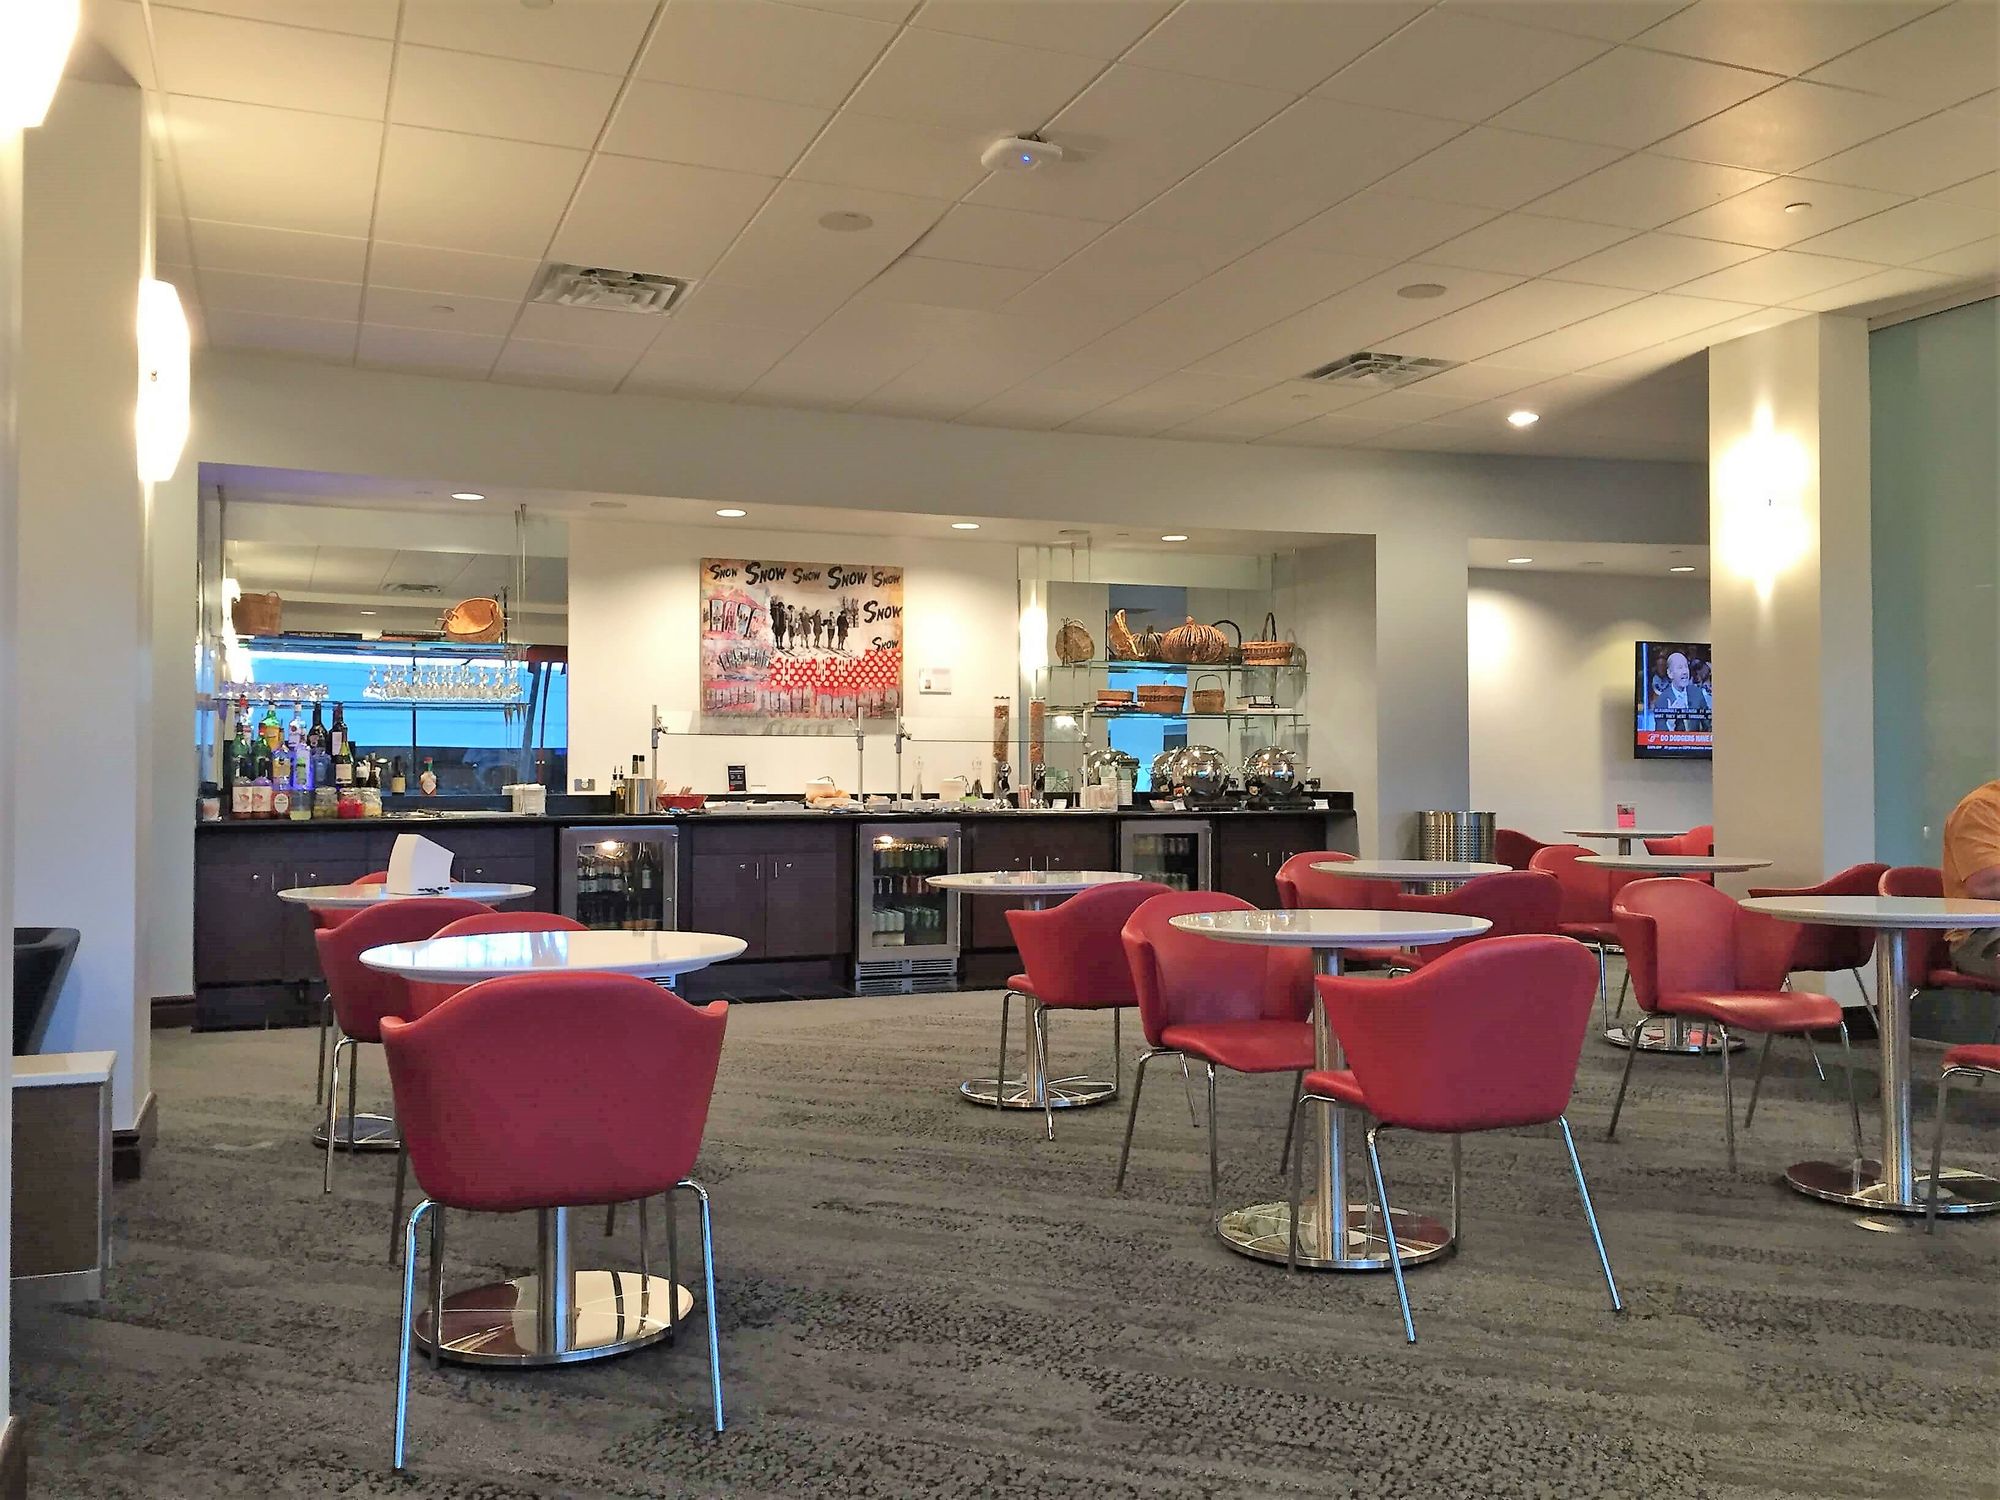                      Lounge Review: Delta Sky Club Denver Airport                             
                     